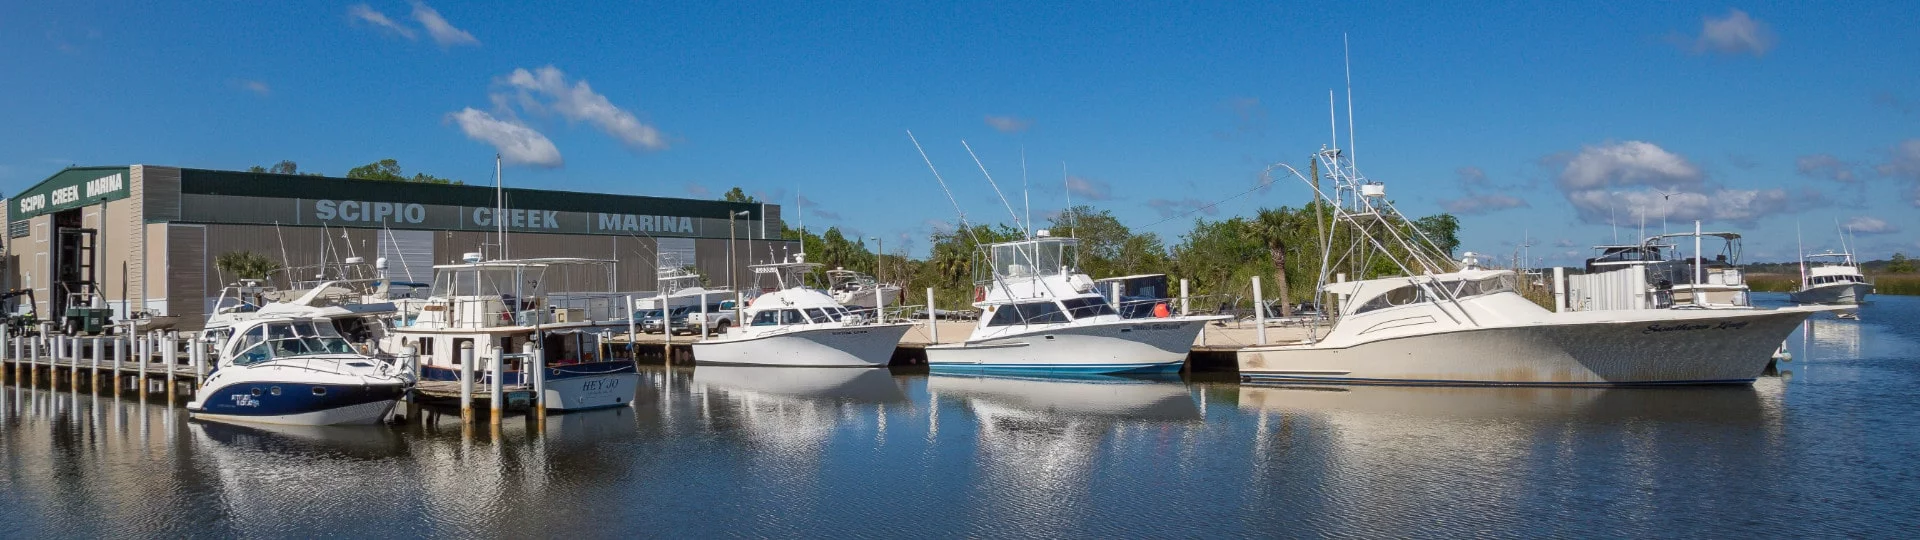 Scipio Creek Marina in Apalachicola Florida